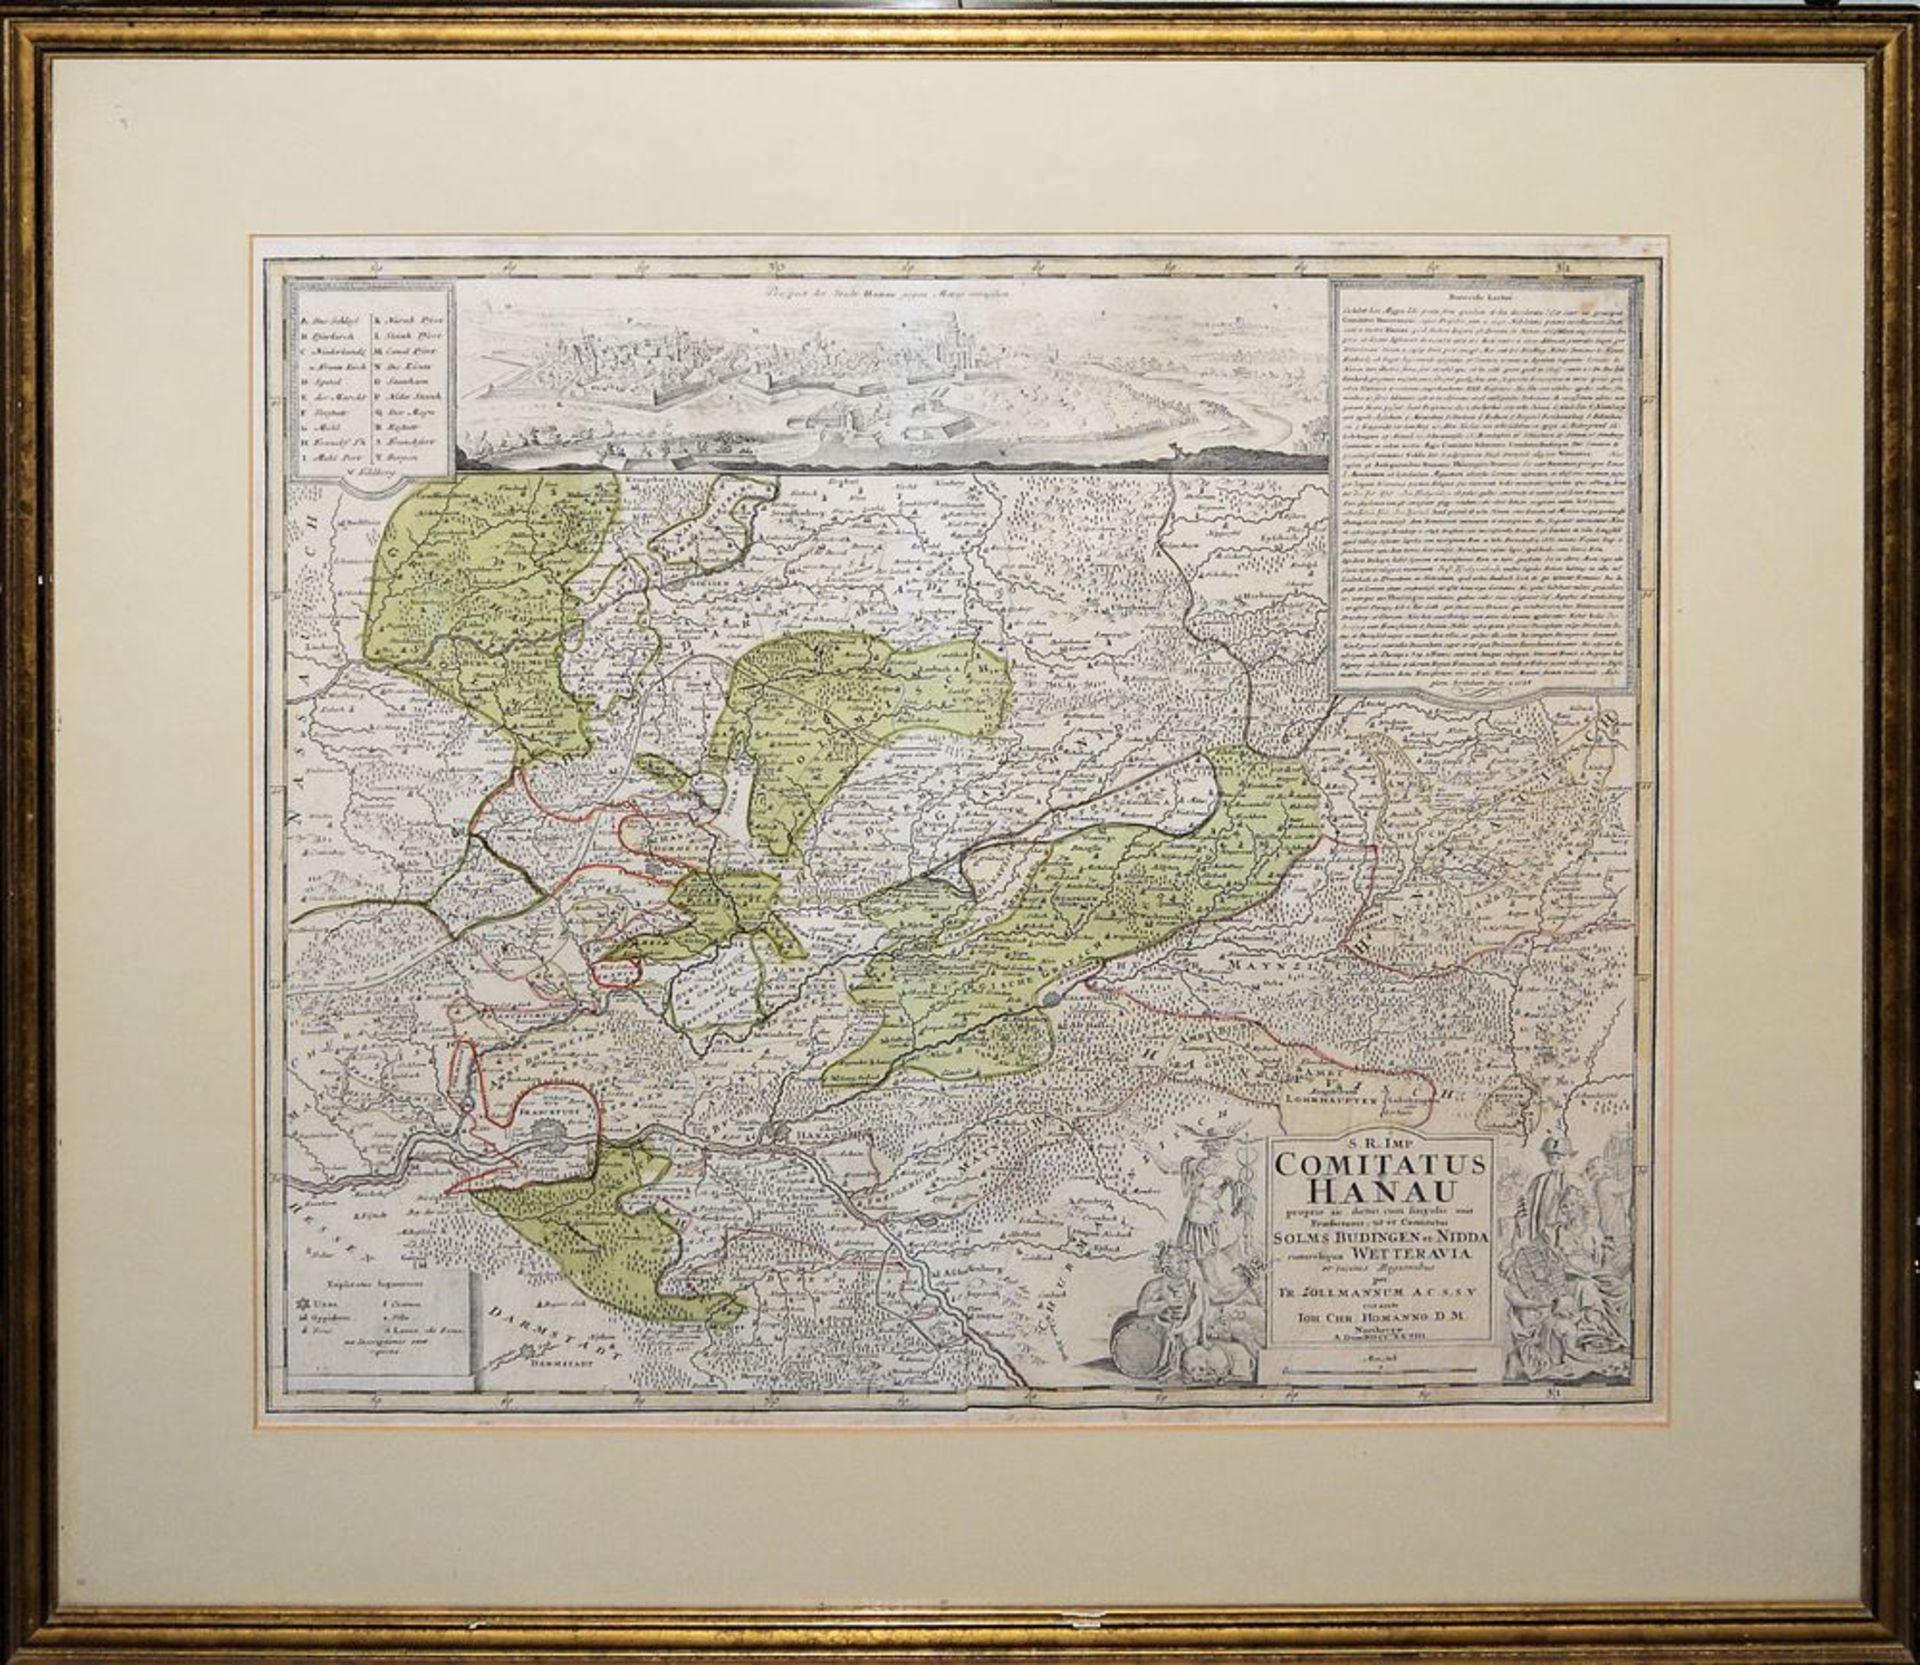 Homann map from 1728: "S. R. Imp. Comitatus Hanau", framed